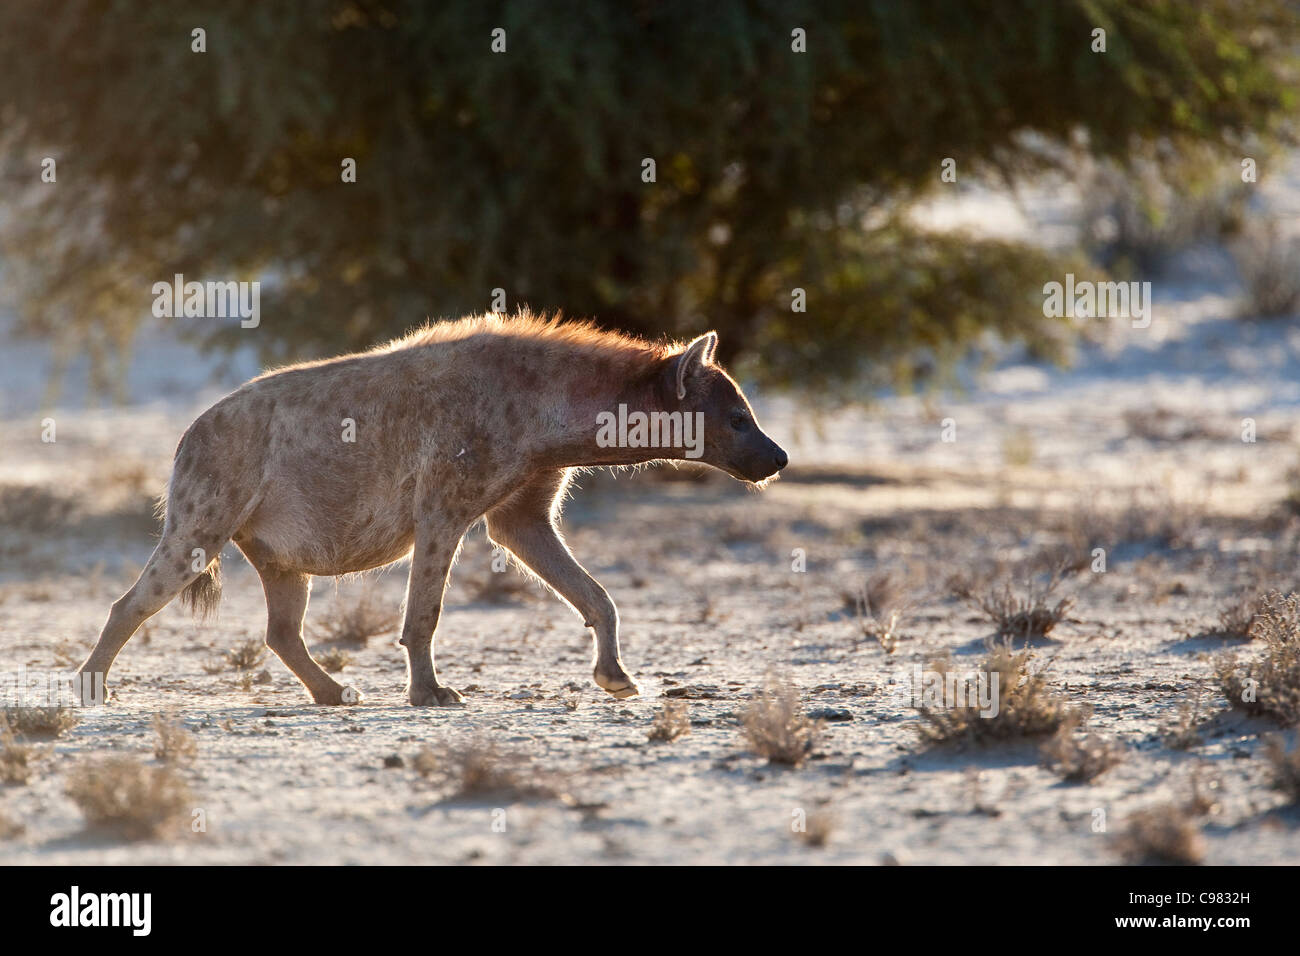 Spotted hyena walking in Nossob Riberbed (Crocuta crocuta) Stock Photo